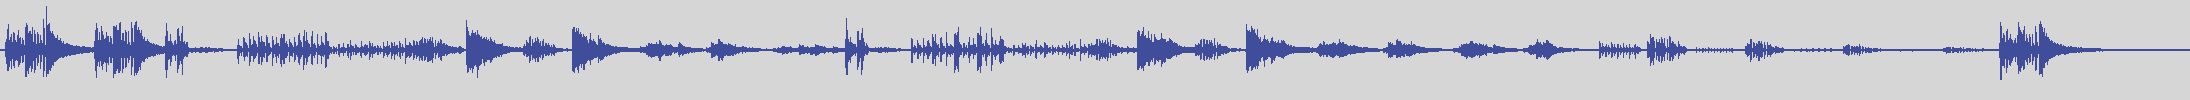 big_music_classic [BMC010] Marco Noia - Stragus [] audio wave form